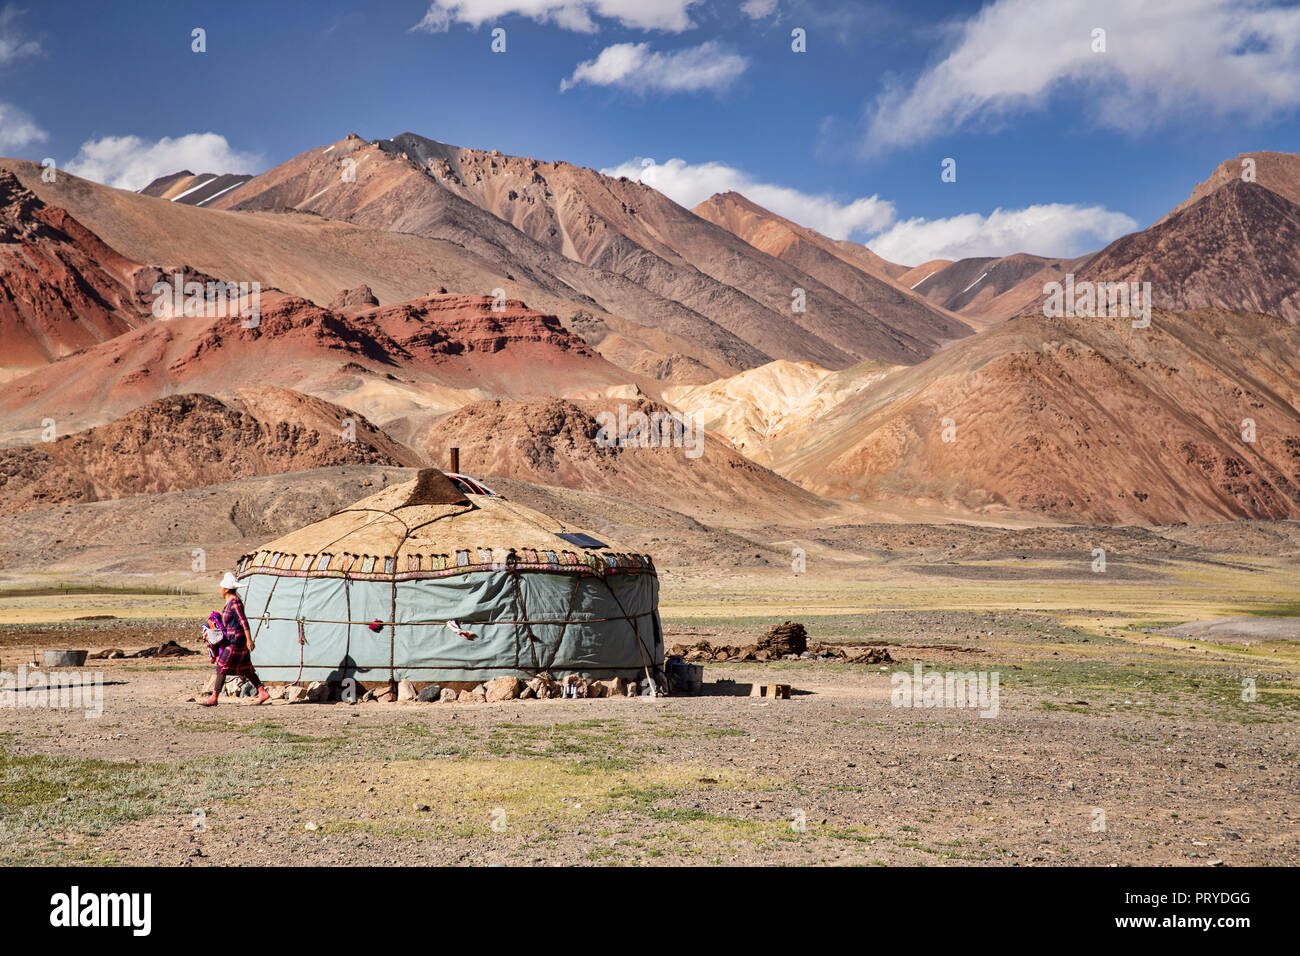 Images taken of Kyrgyz nomadic life in the remote Pshart Valley, Gorno-Badakhshan Autonomous Region, Tajikistan. Stock Photo